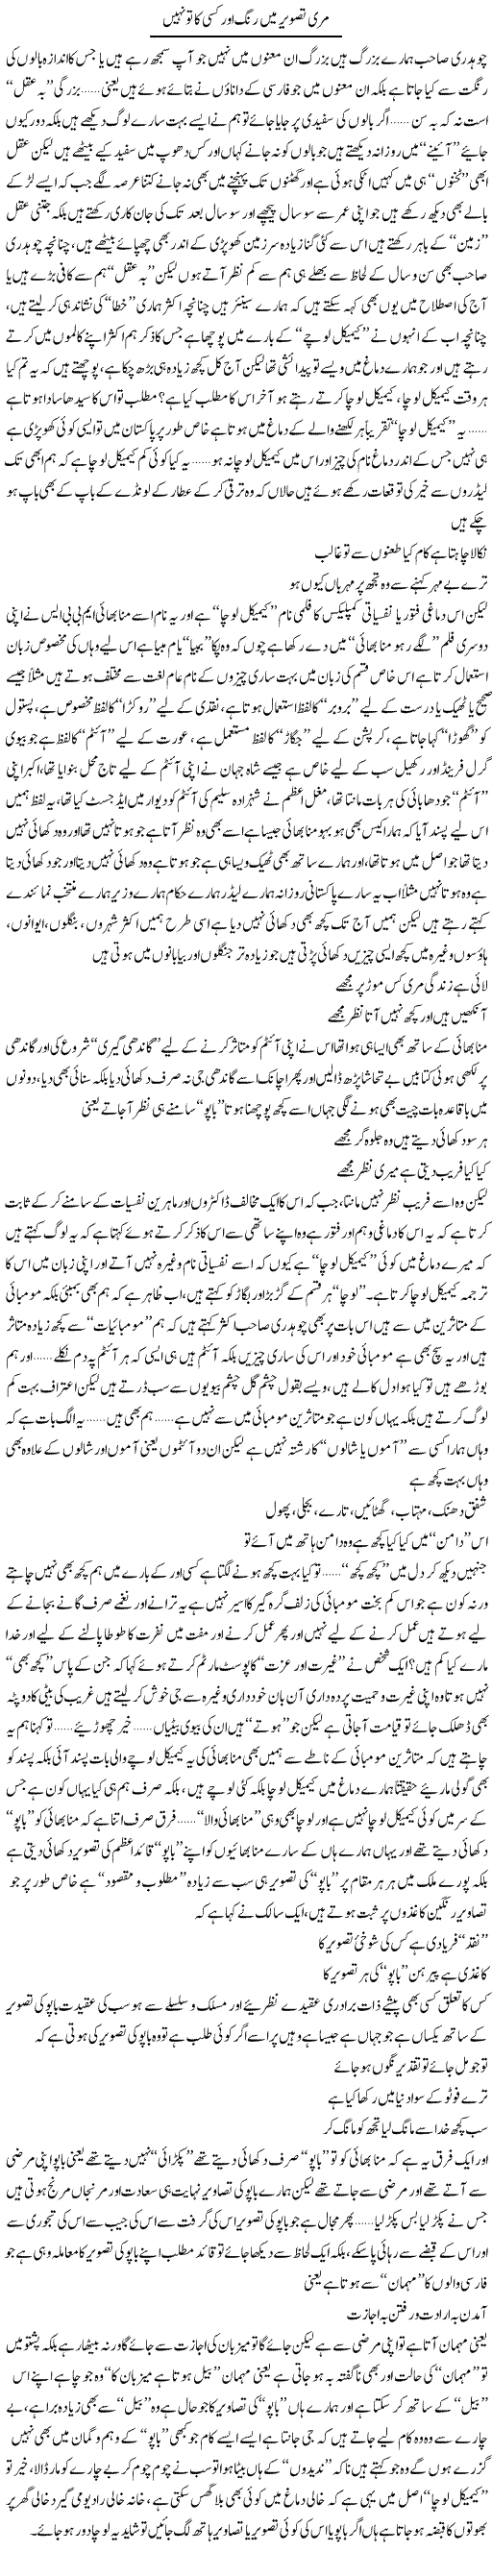 Meri Tasweer Mein Rang Aur Kisi Ka To Nahi | Saad Ullah Jan Barq | Daily Urdu Columns